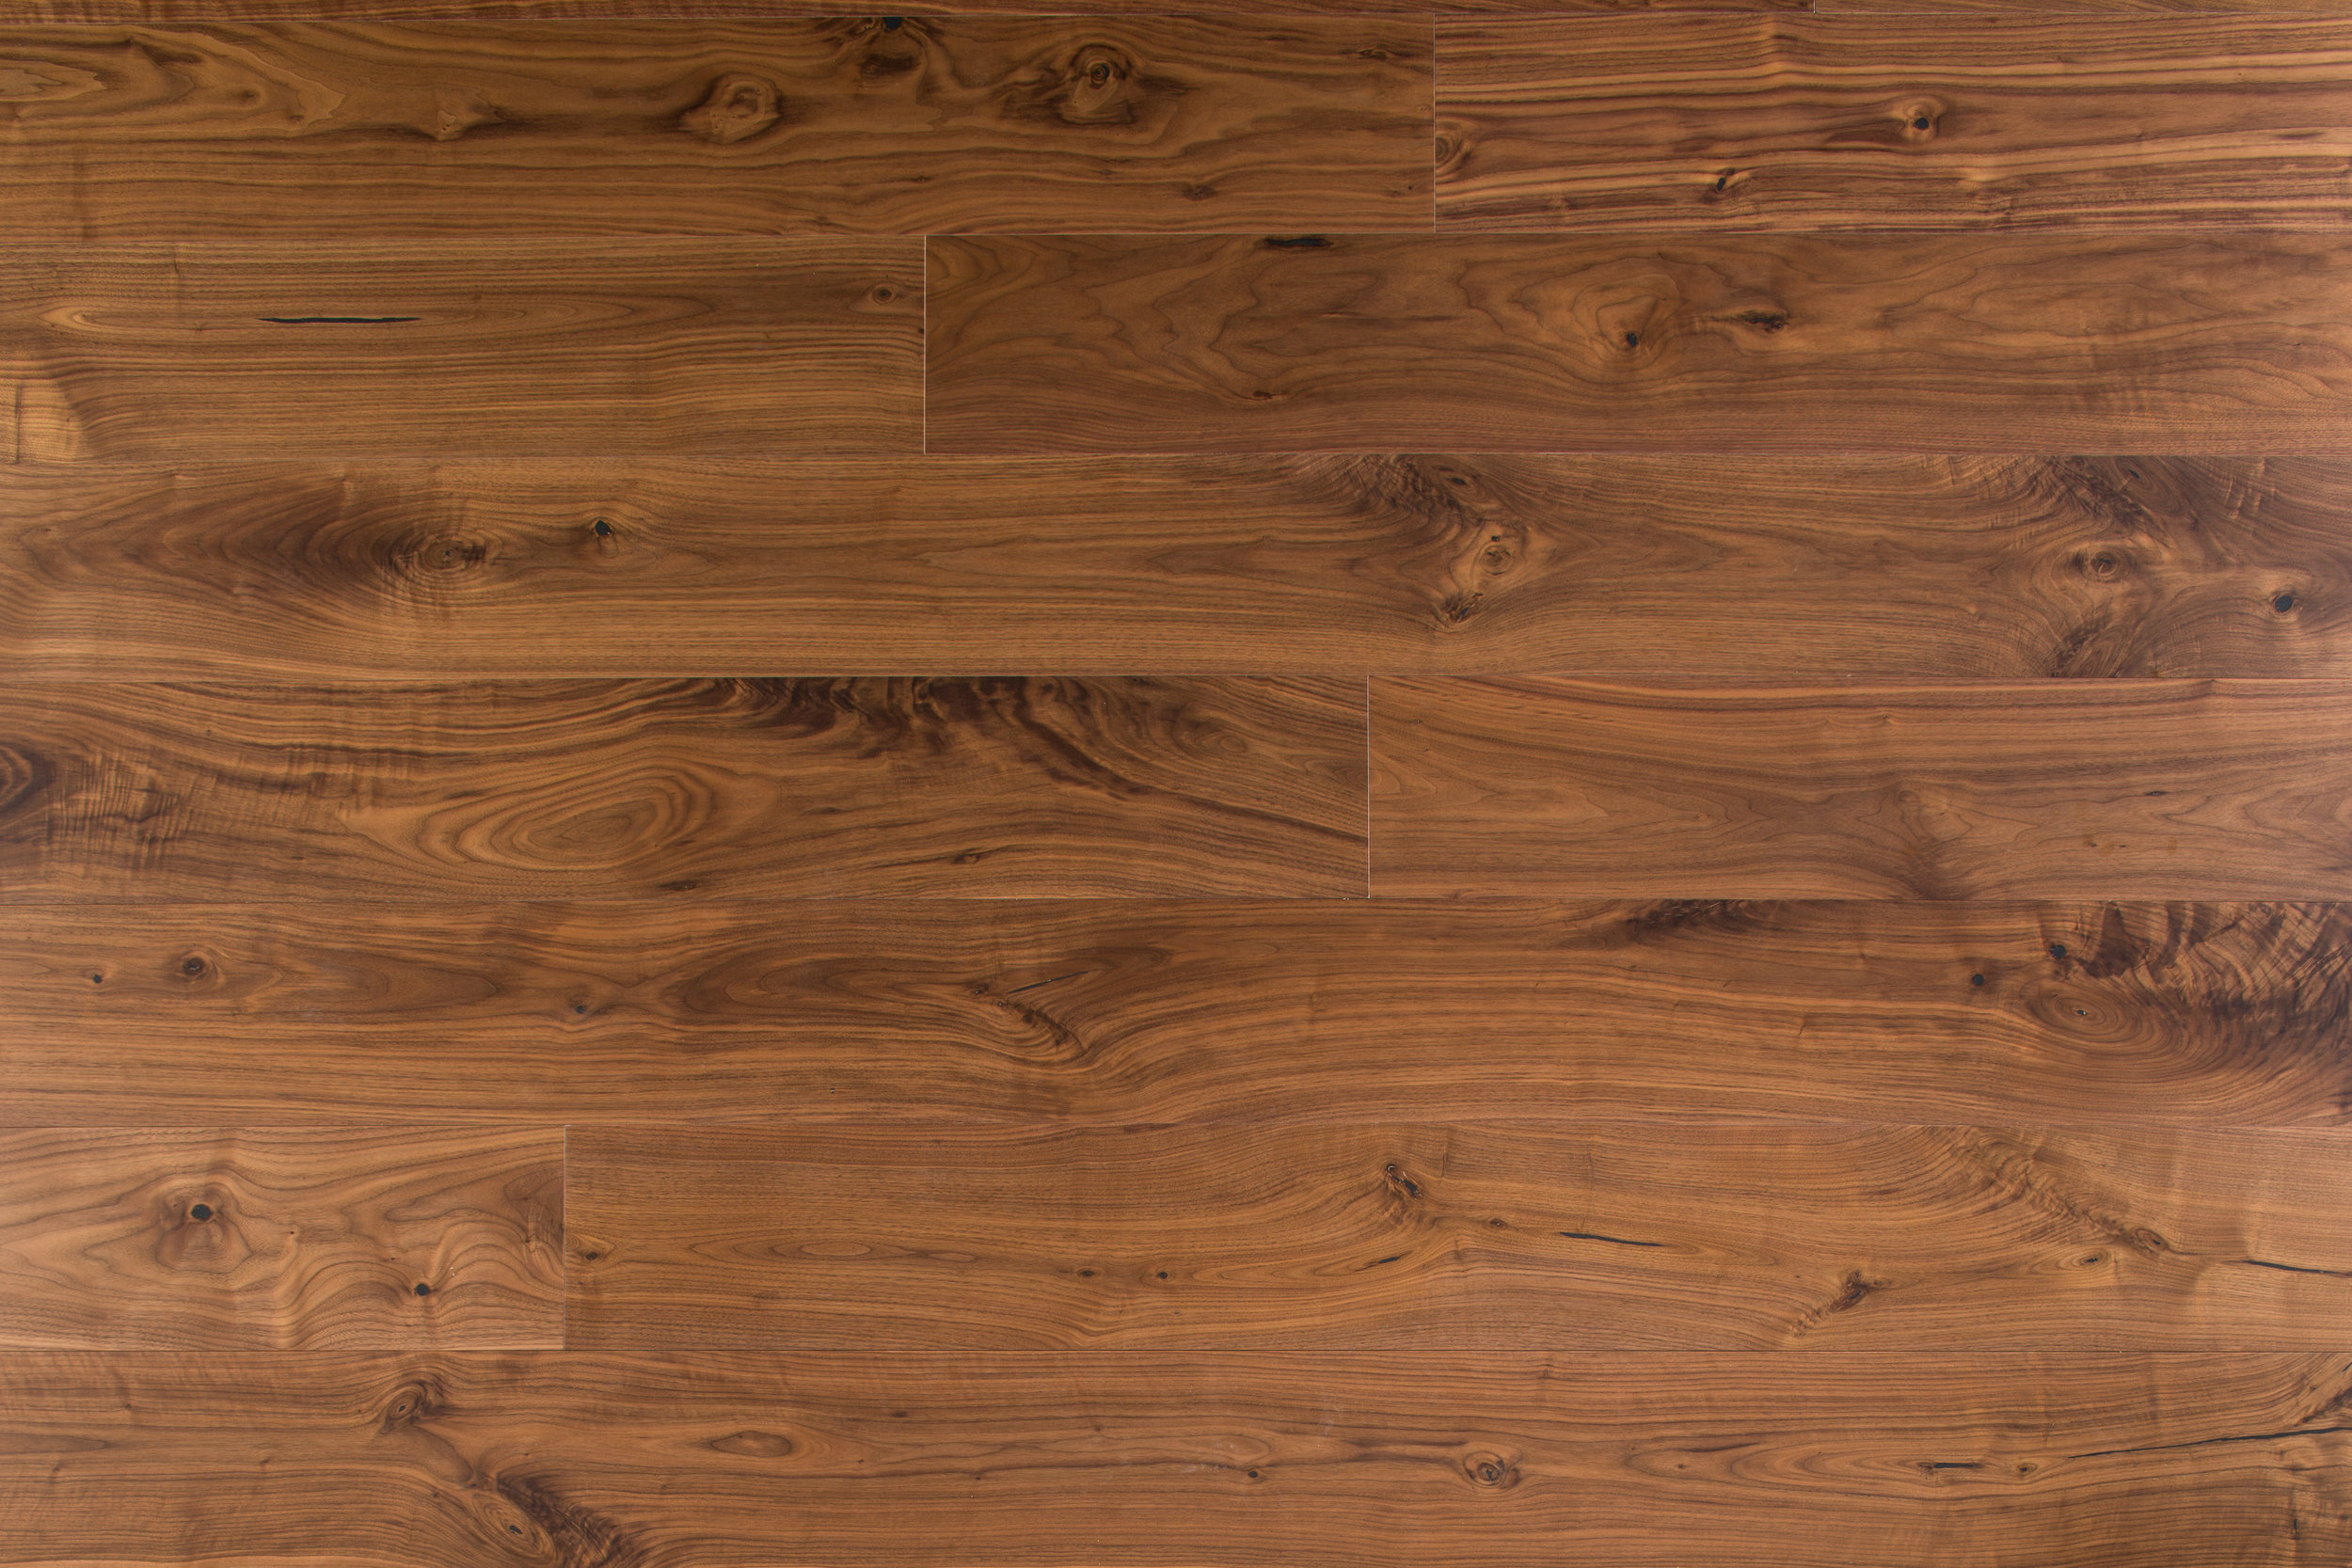 Walnut Flooring And European White Oak, Campbell Hardwood Floors